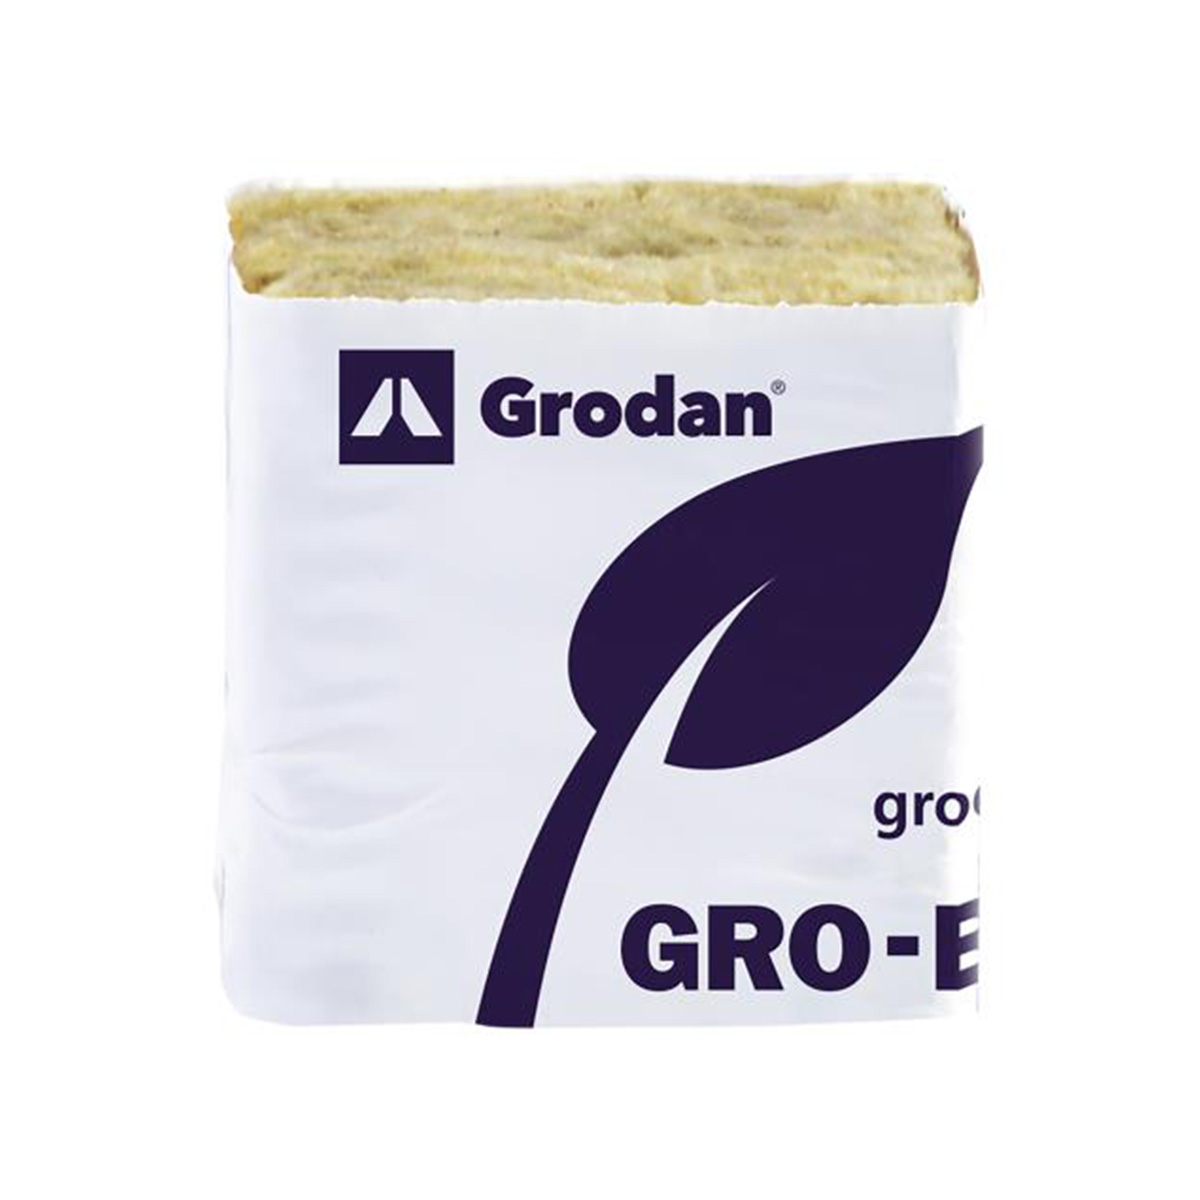 Grodan Improved Gro-Block - 1.5x1.5x1.5 Block